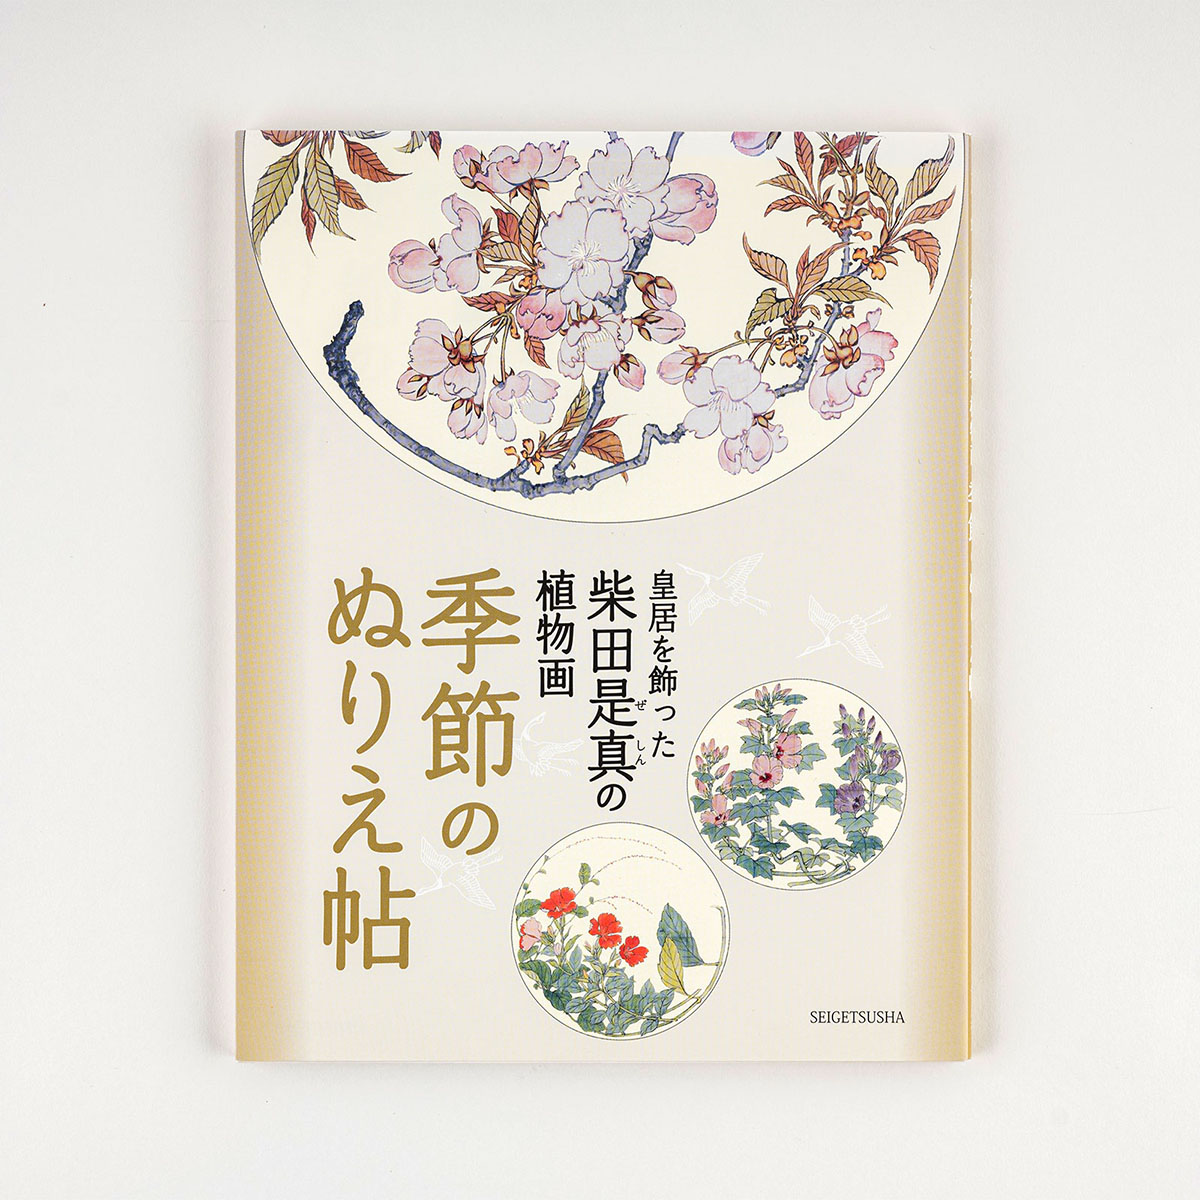 Seasonal Coloring Book of Shibata Zeshin's Floral Paintings that 